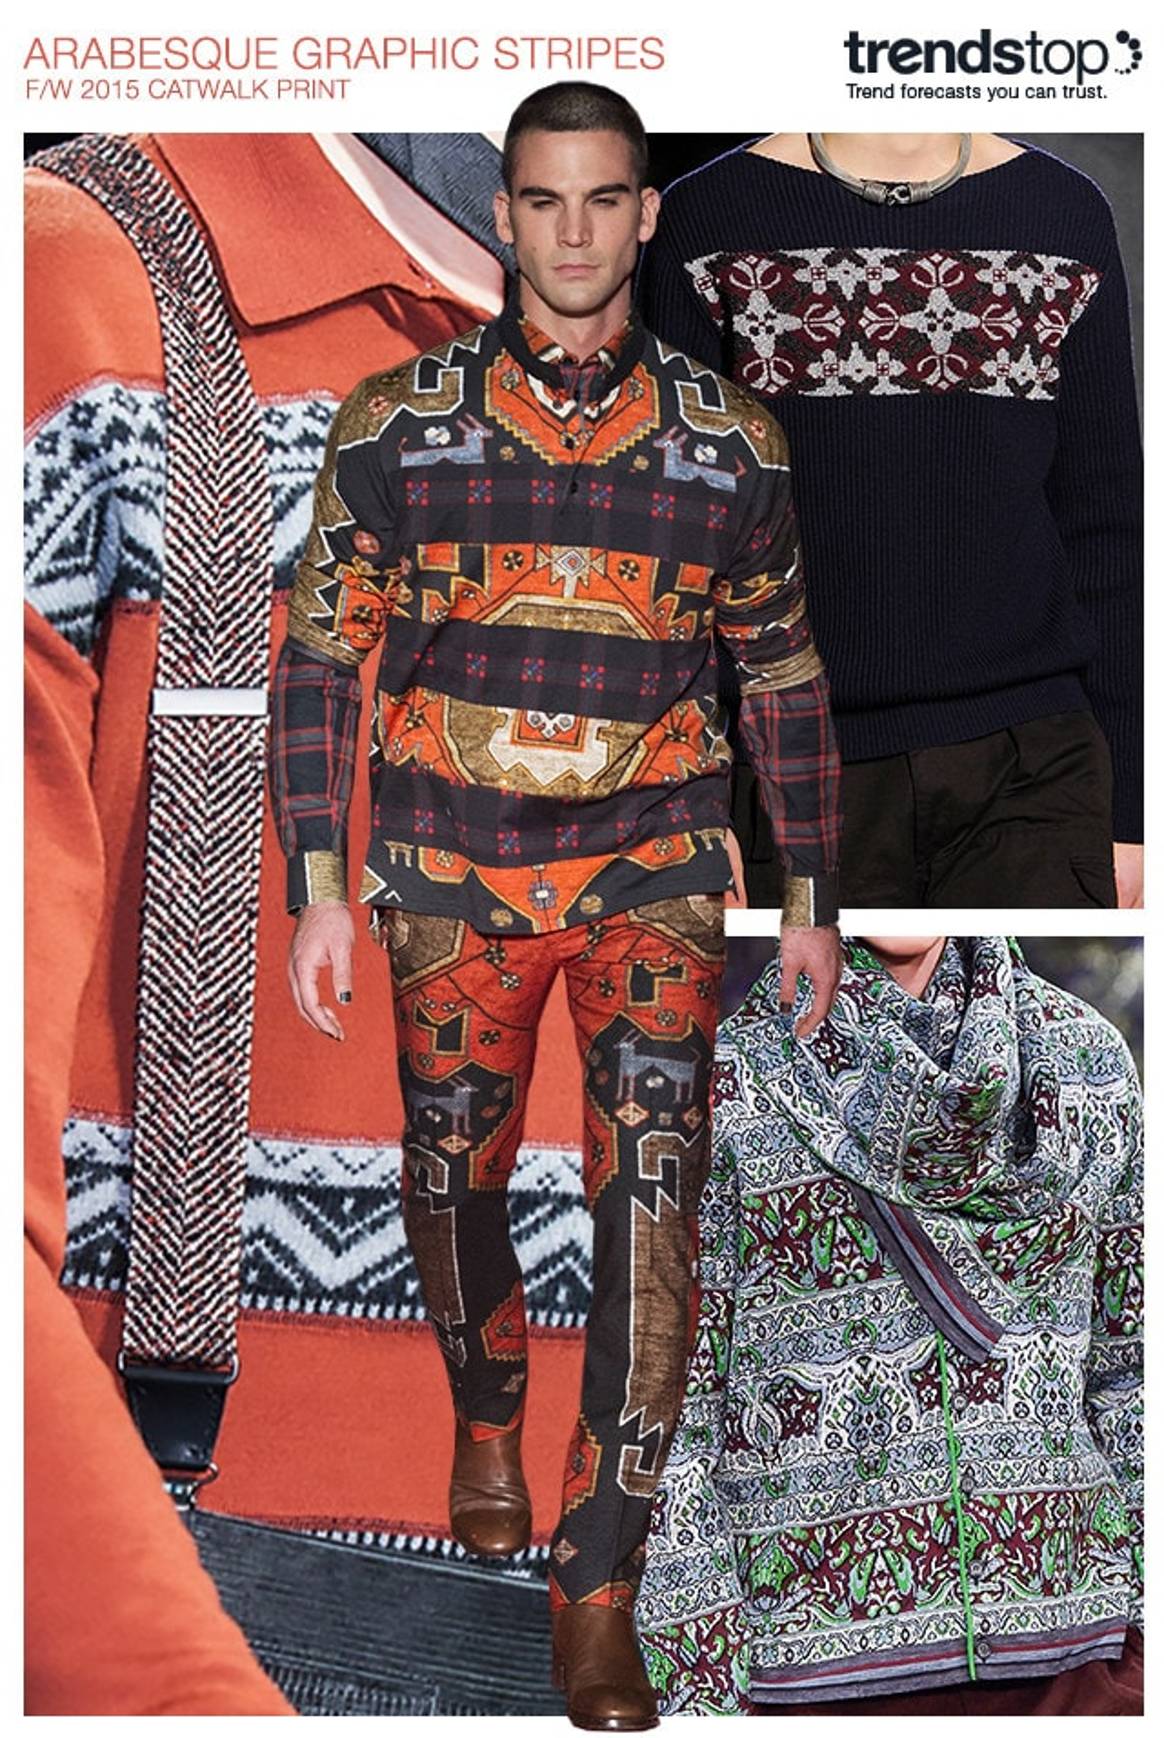 Key print on the catwalk menswear trend for fall/winter 2015-16